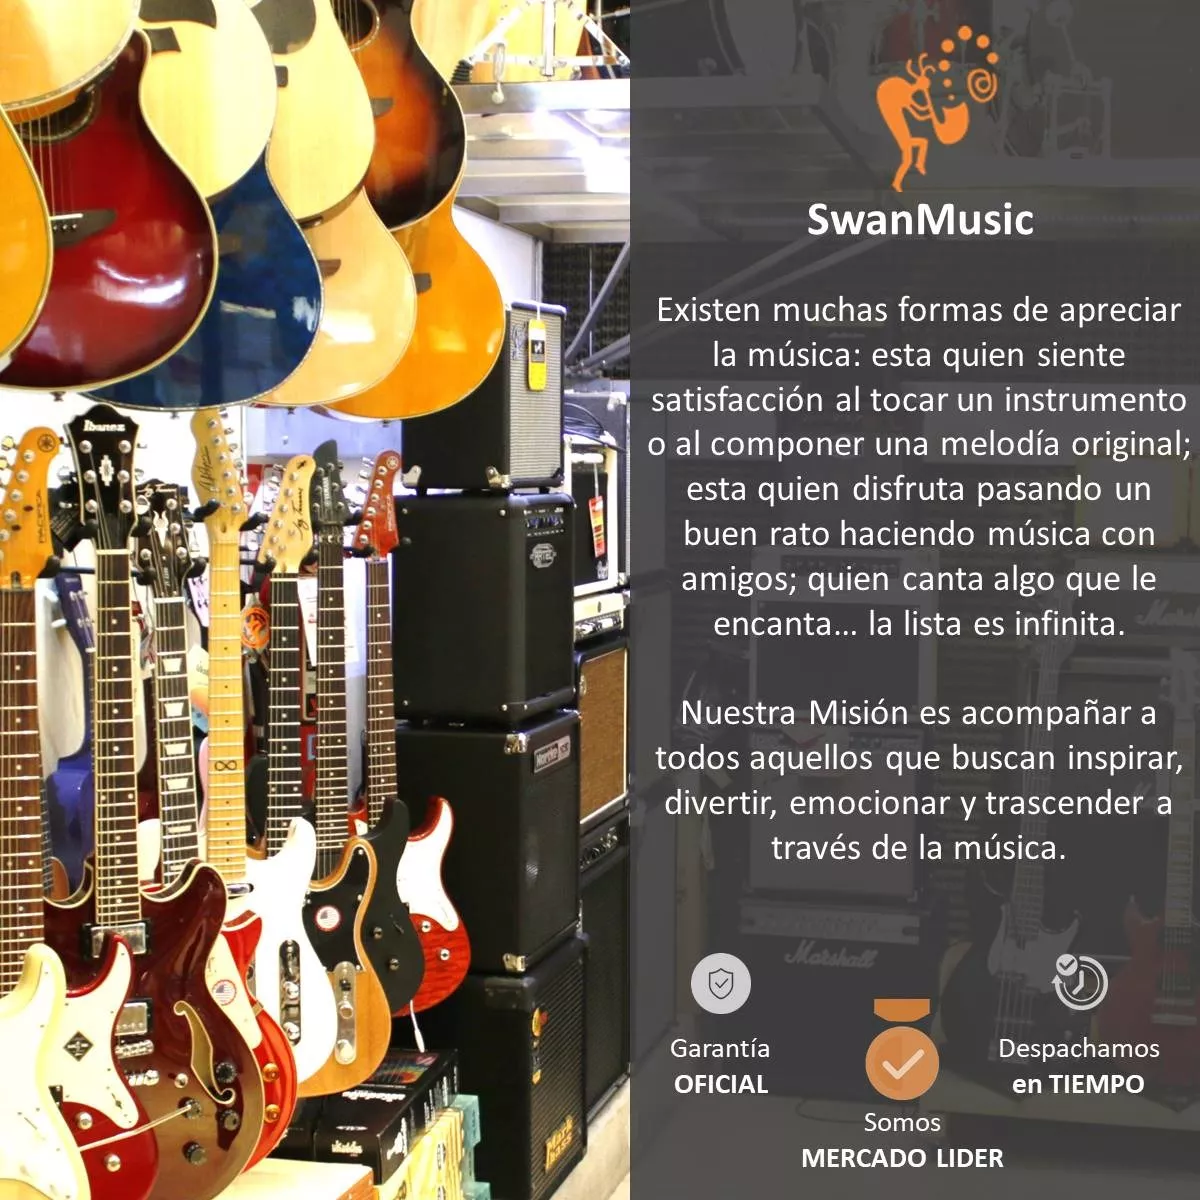 Encordado Para Guitarra Clásica Campana Export Criolla